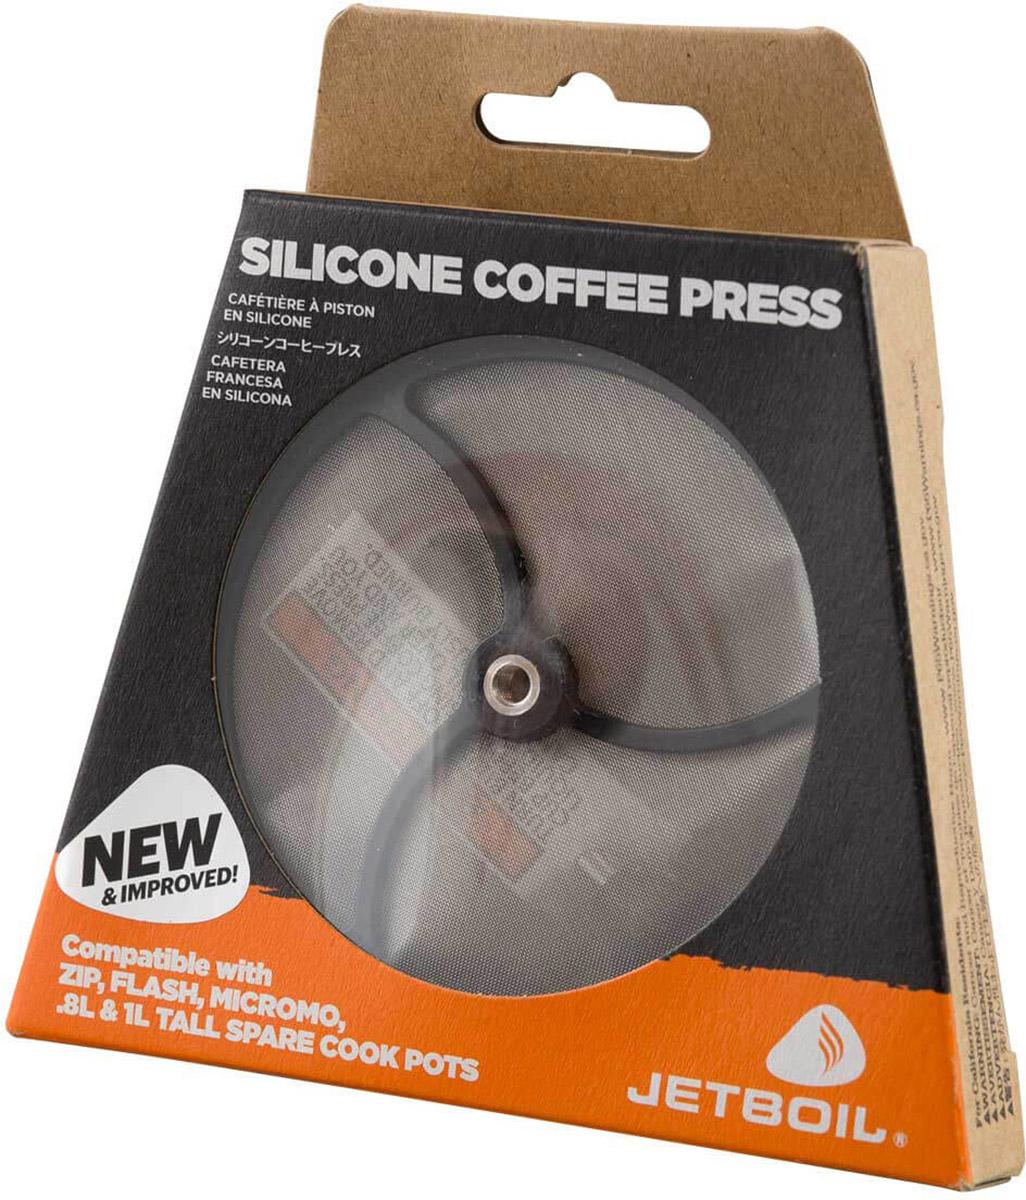 Jetboil Coffee Press (zip/flash/micromo) - Carbon